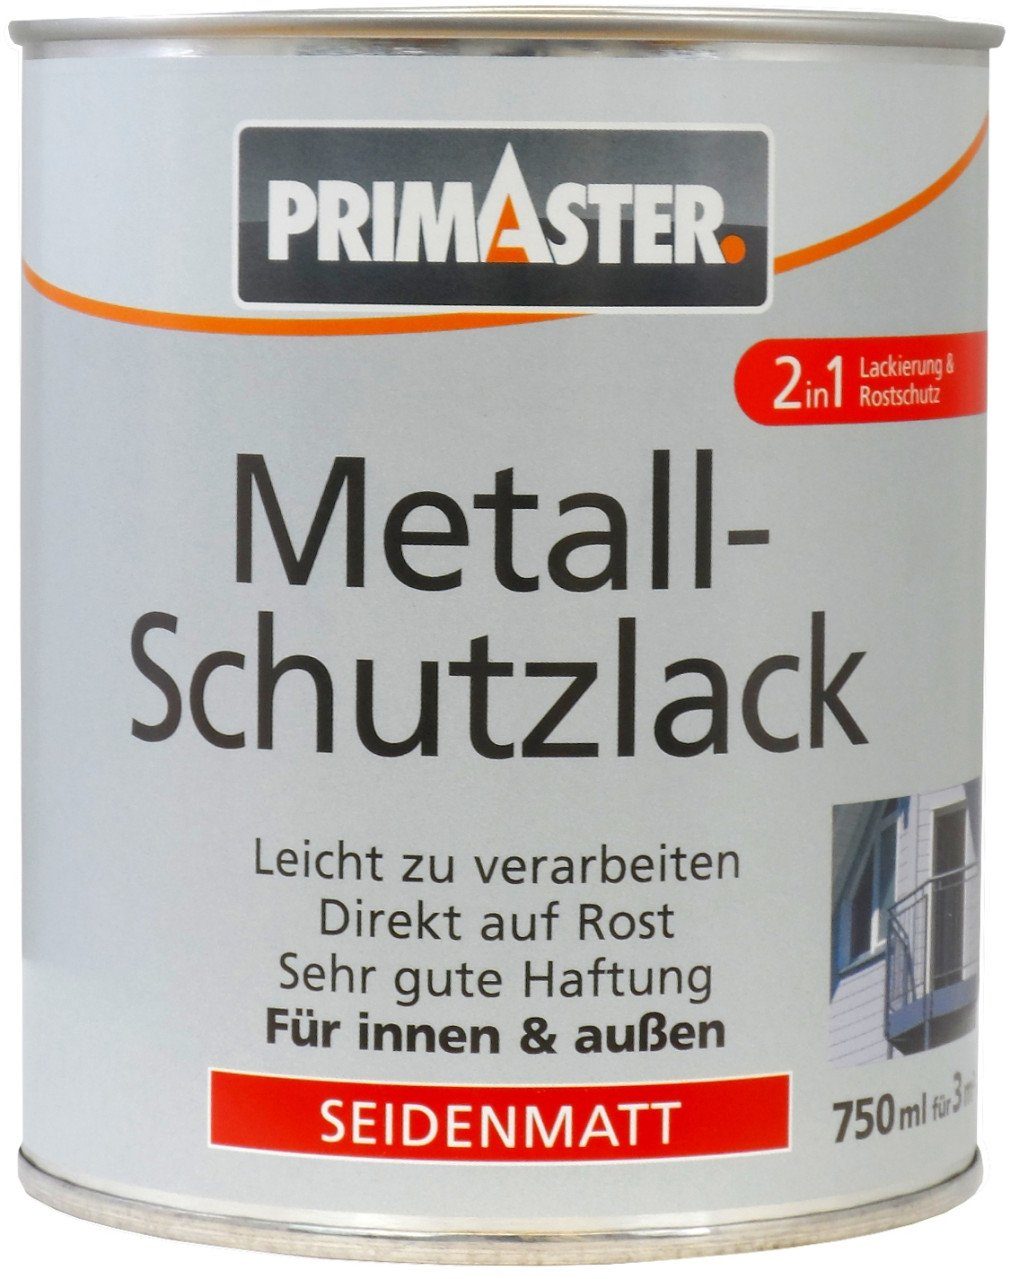 750 Metallschutzlack Primaster 6005 RAL ml Metall-Schutzlack Primaster